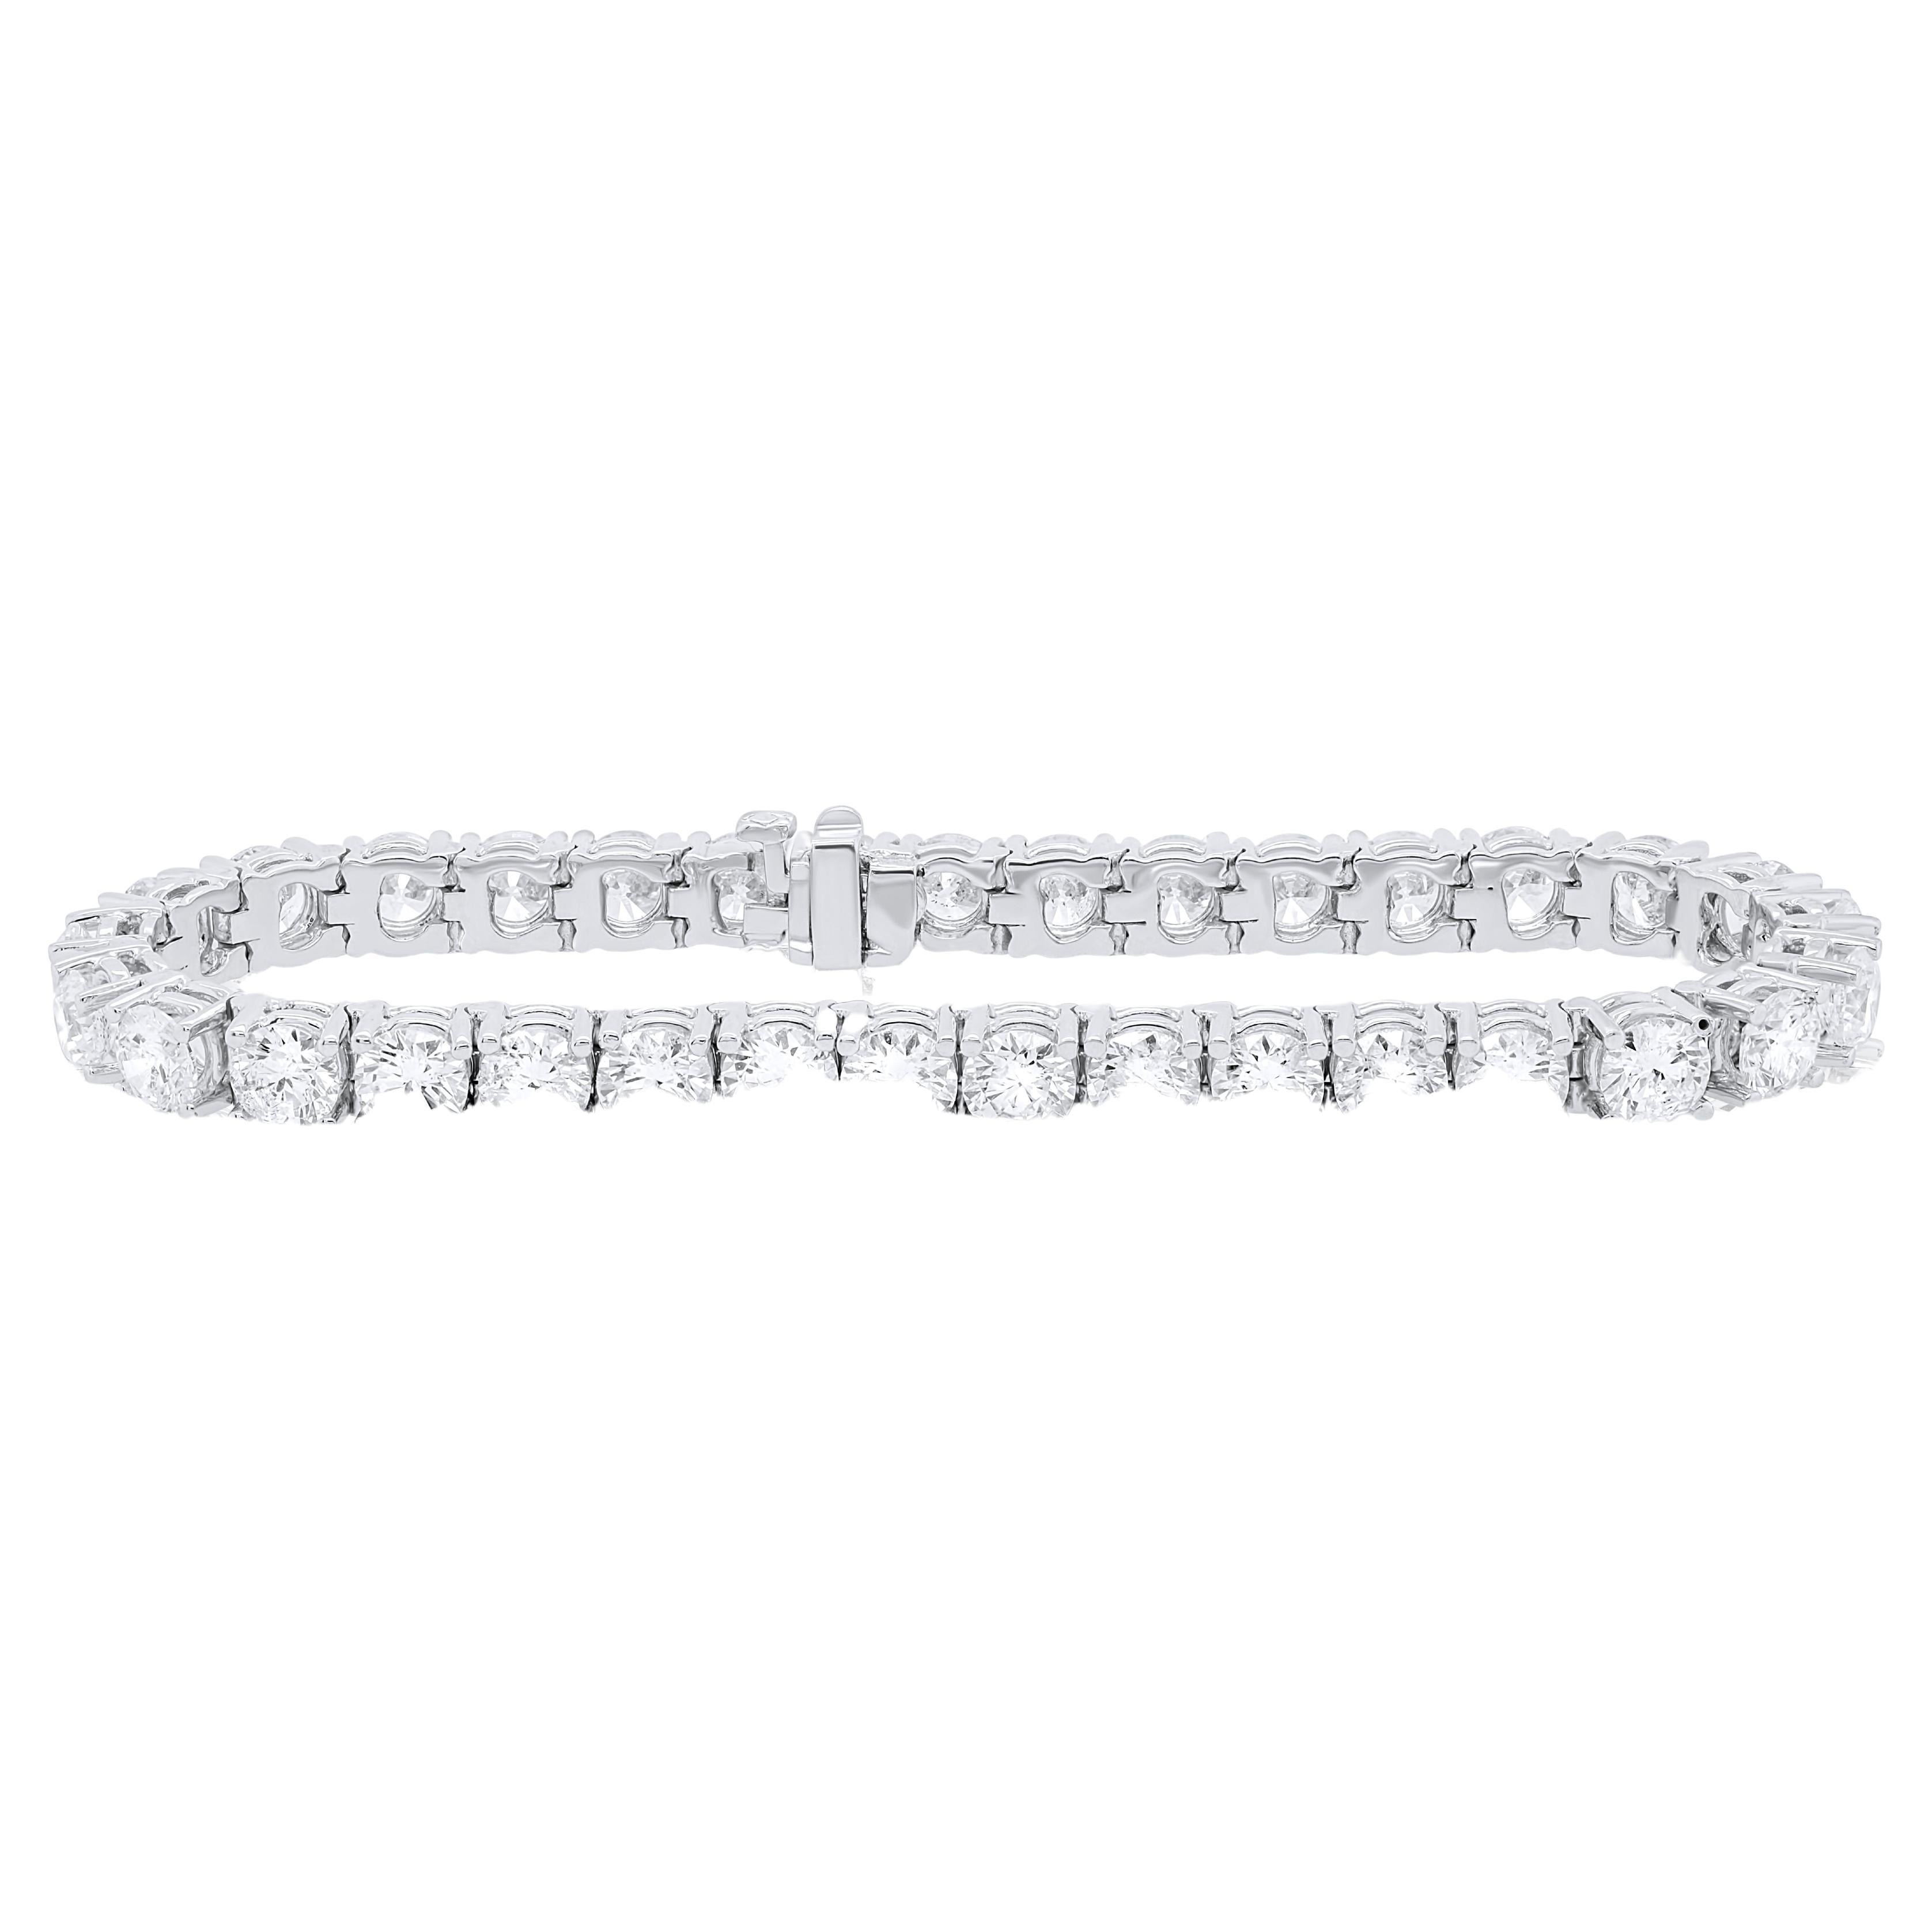 Custom 18 kt white gold 4 prong diamond tennis bracelet with 14.55 cts brilliant-cut round diamonds  0.40 each 36 stones. FG Color. SI Clarity. Excellent Cut.

